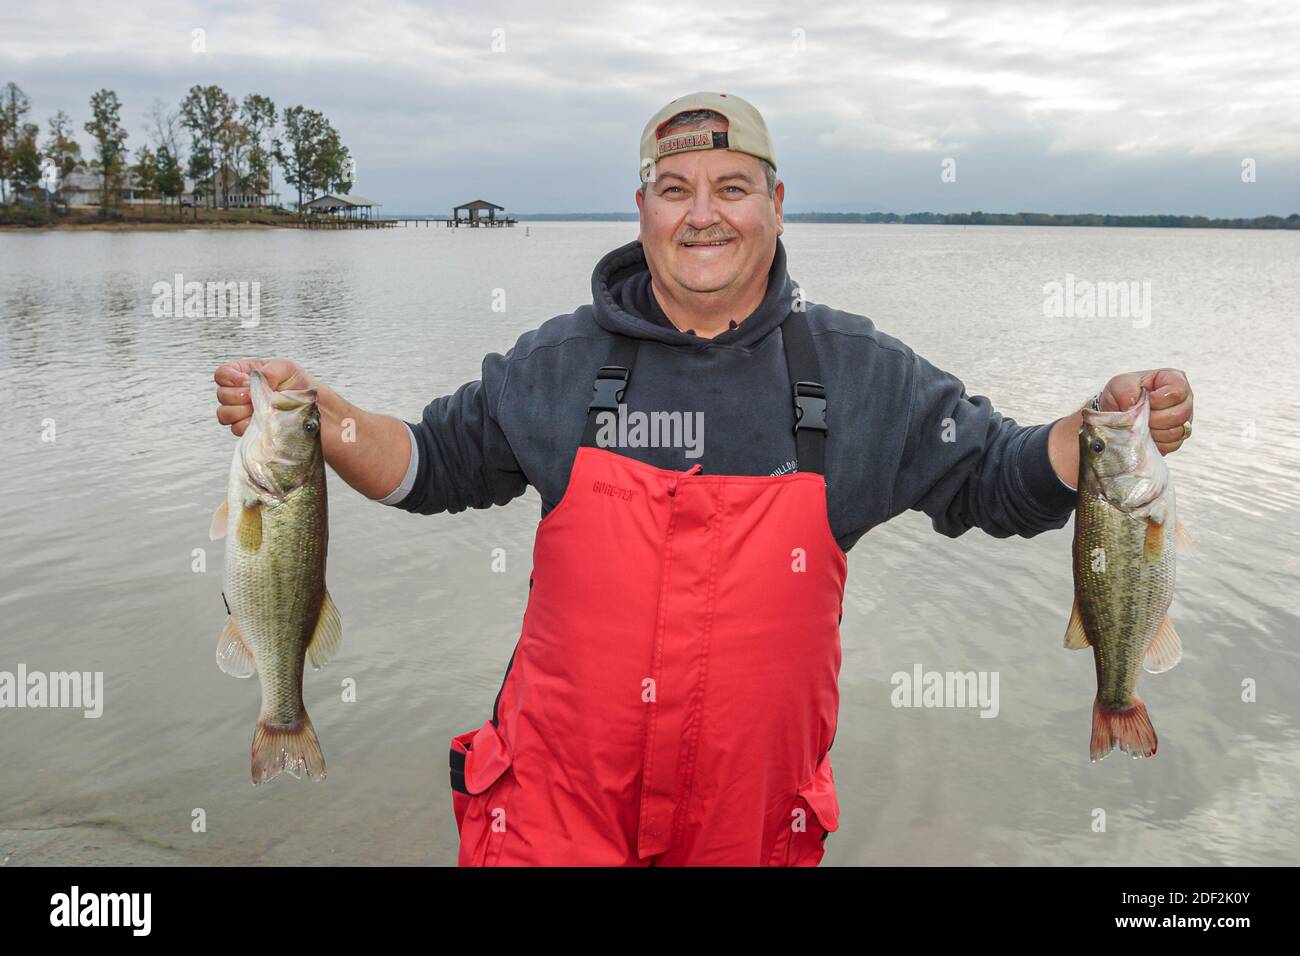 Alabama Cedar Bluffs Weiss Lake bass fisherman,fishing holds holding fish catch, Stock Photo